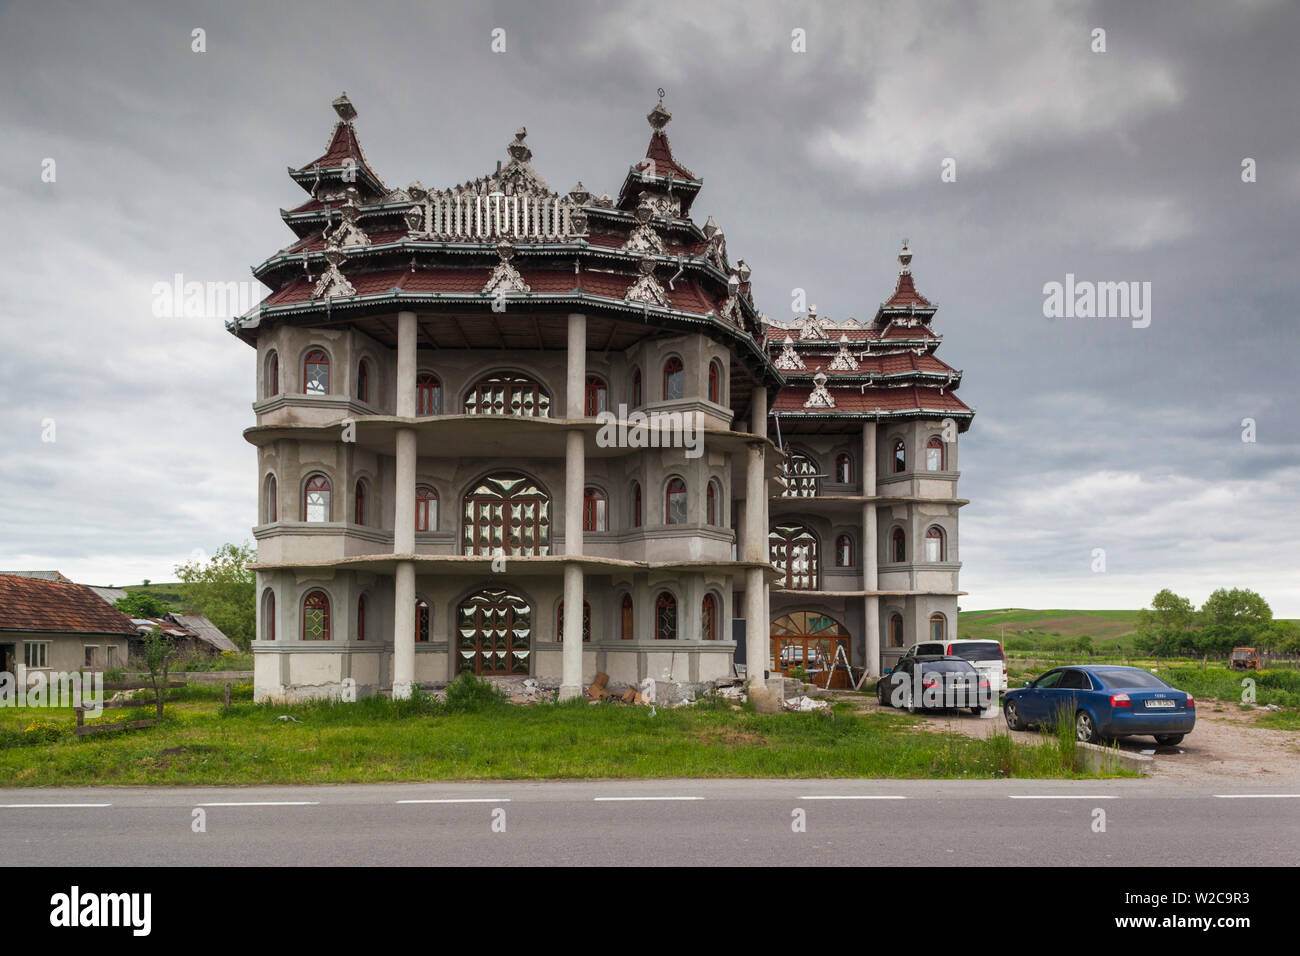 Rumänien, Siebenbürgen, Huedin, Roma Paläste, große Häuser von Expat-Roma-Familien Stockfoto